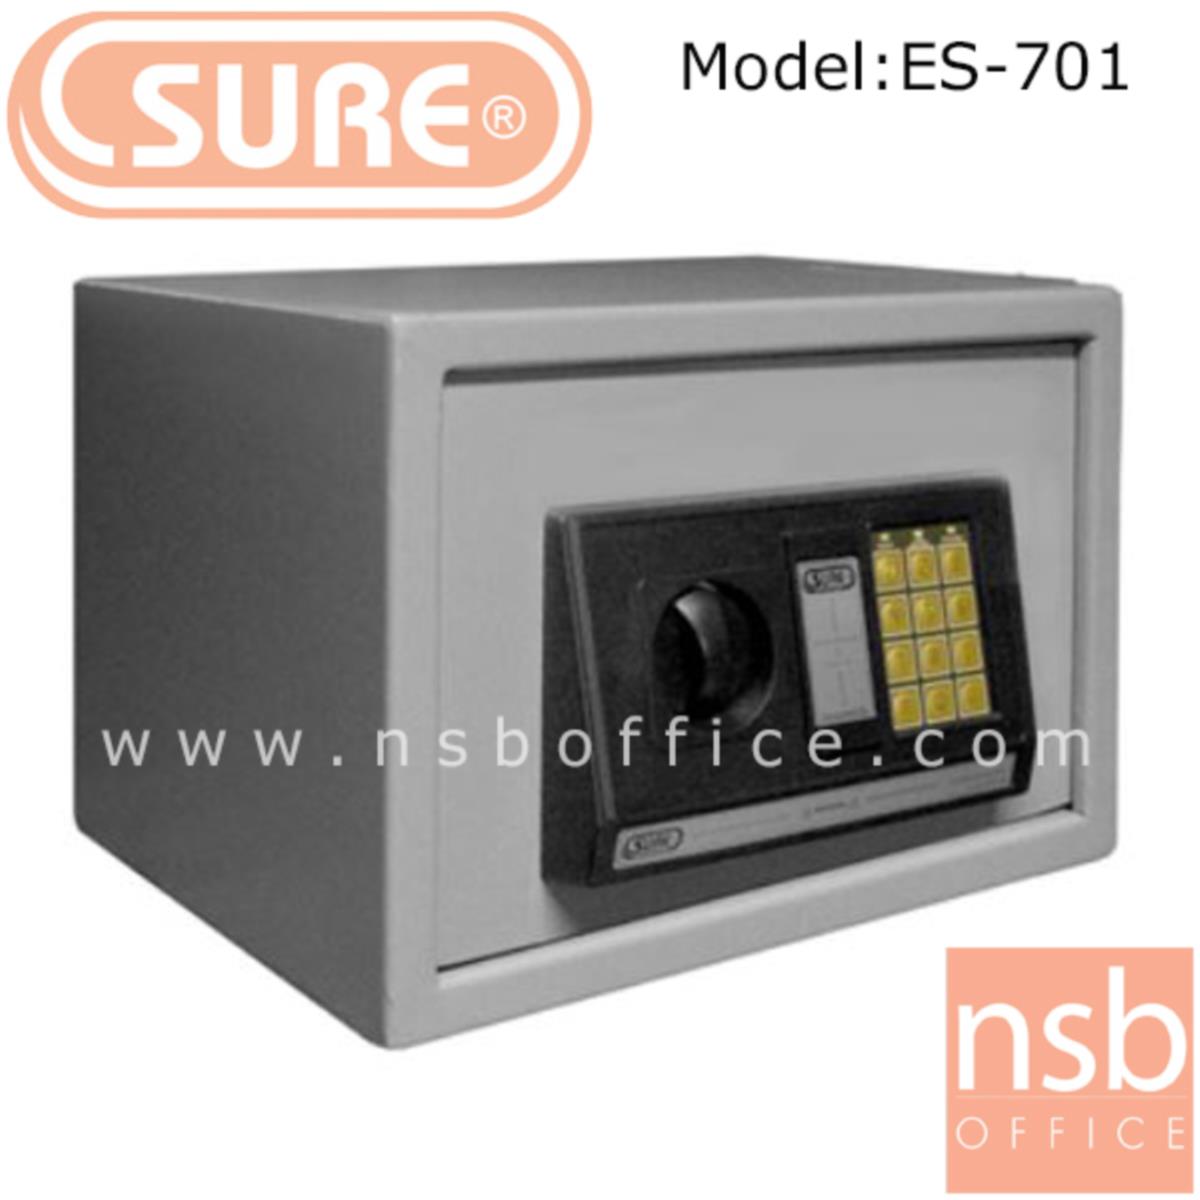 F03A010:ตู้เซฟดิจิตอล SR-ES-701 (1 รหัสกด / ปุ่มหมุนบิด) ขนาด 35W*25D*25H cm.   